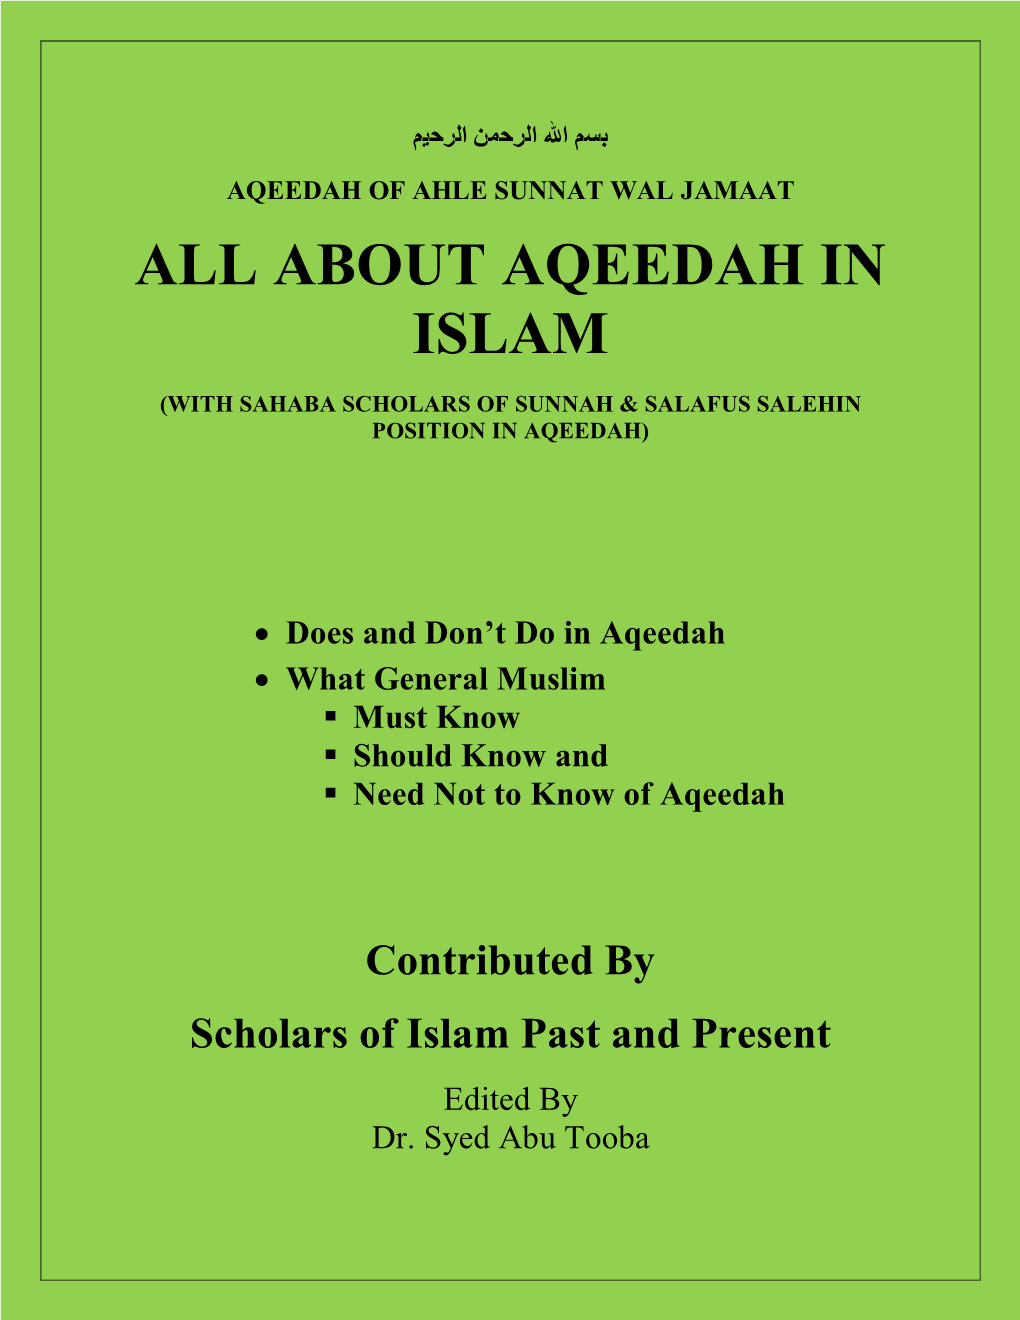 About Aqeedah in Islam